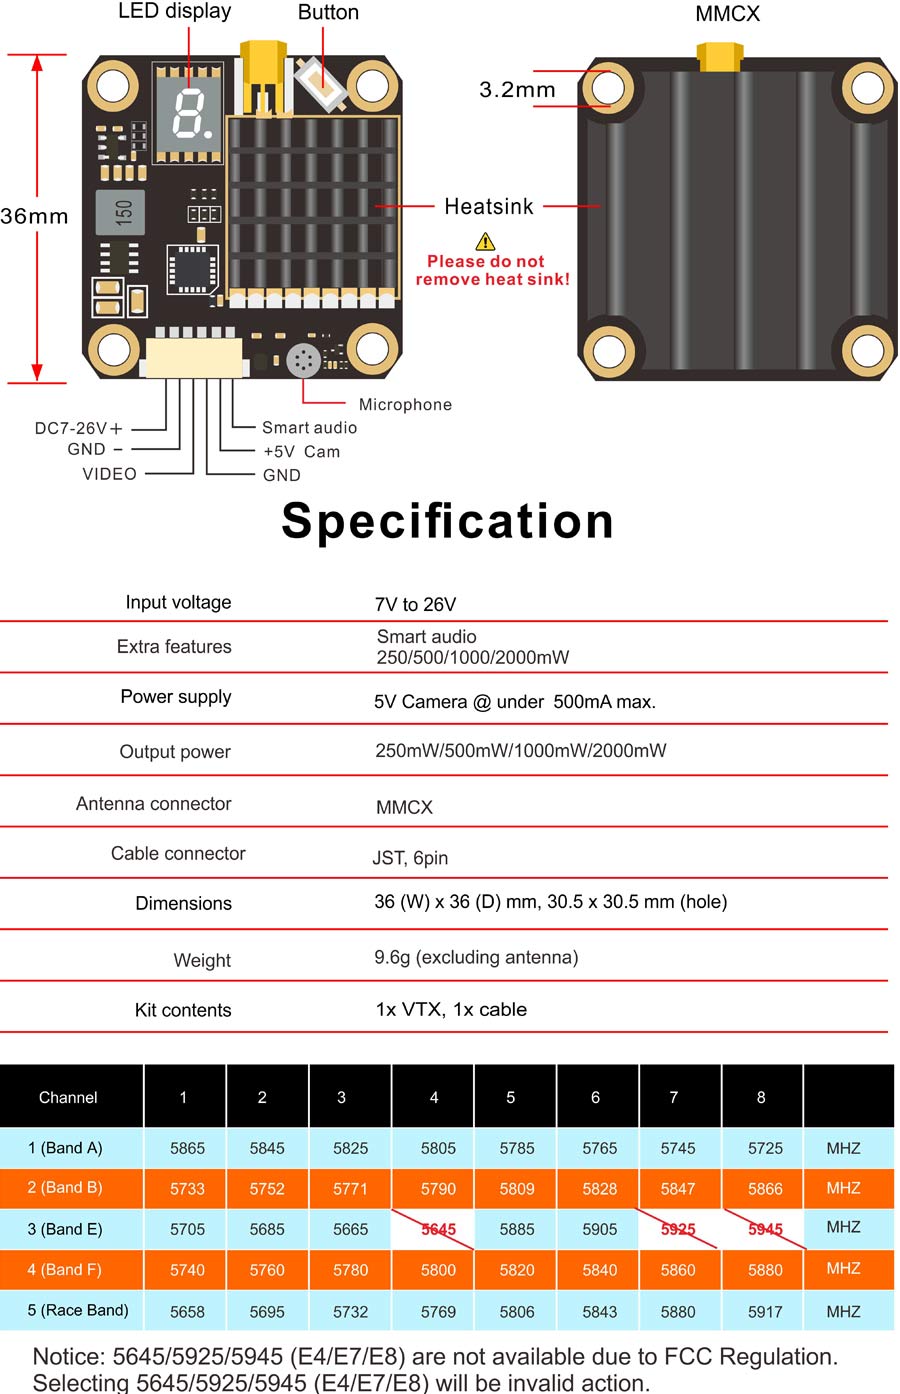 AKK FX2-Dominator 2000mW 5.8G VTX, LED display Button MMCX 3.2mm 36mm 8 heatsink Please do not